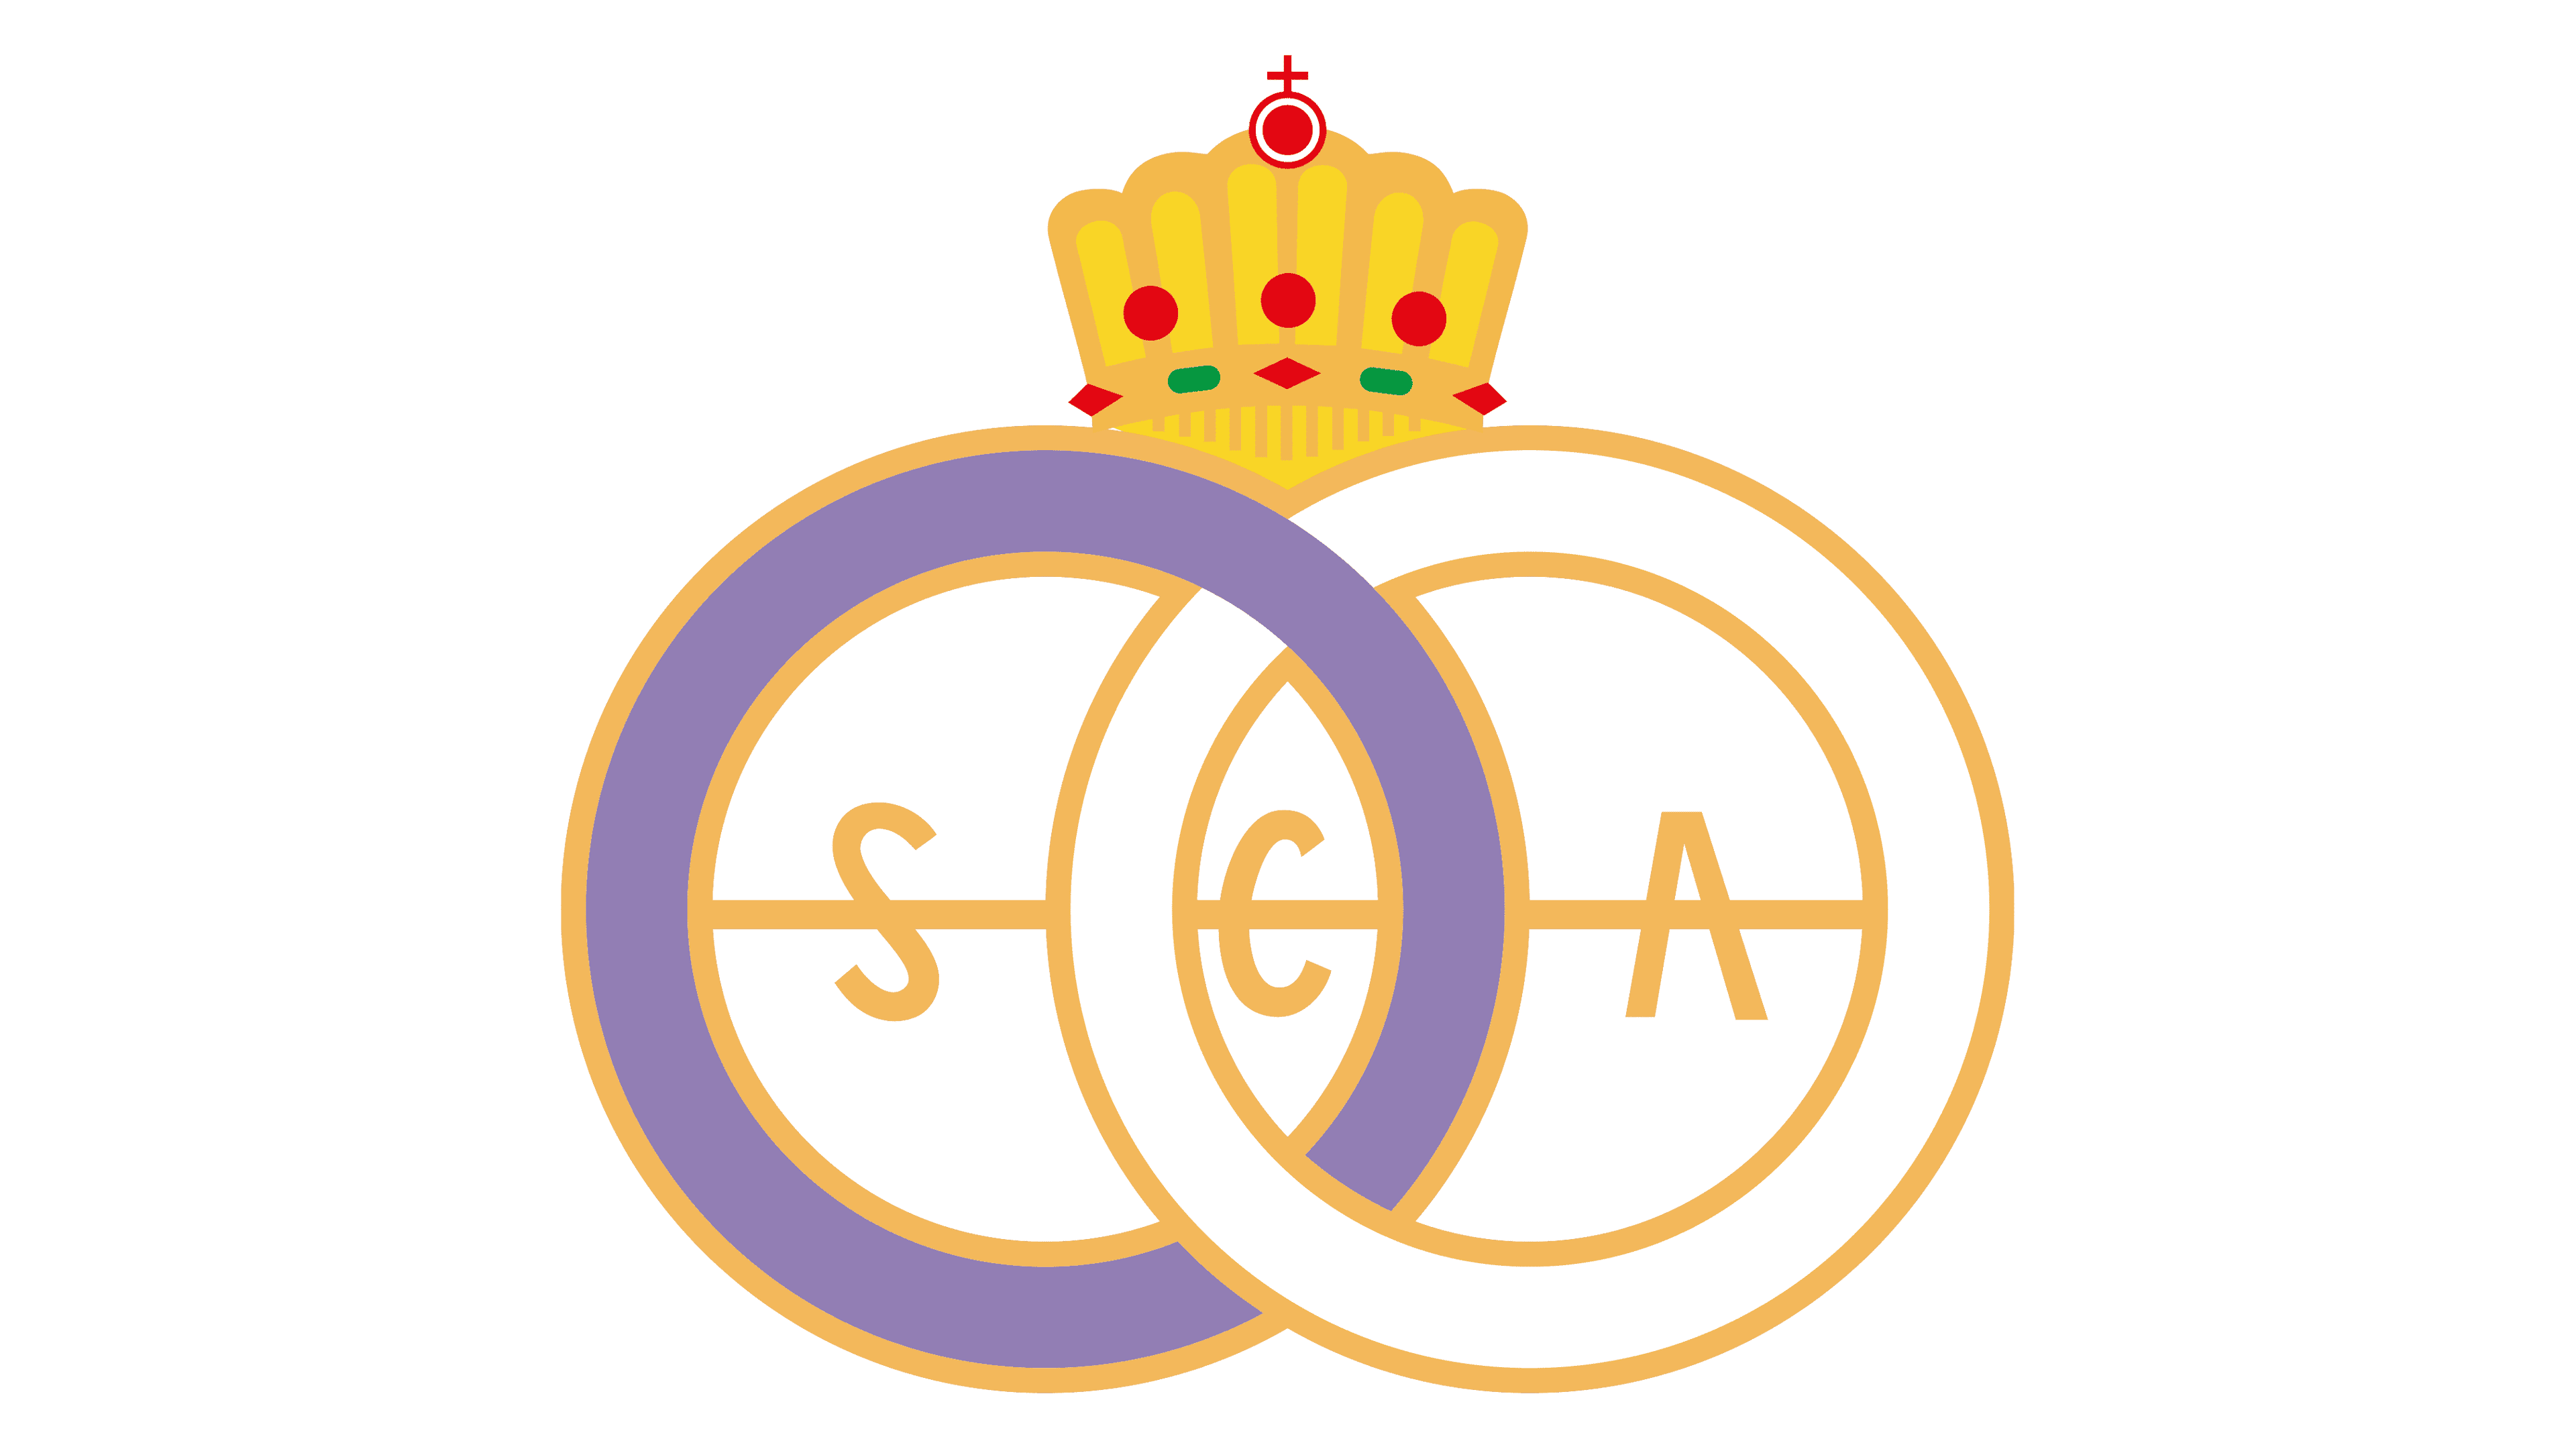 Official website Royal Sporting Club Anderlecht